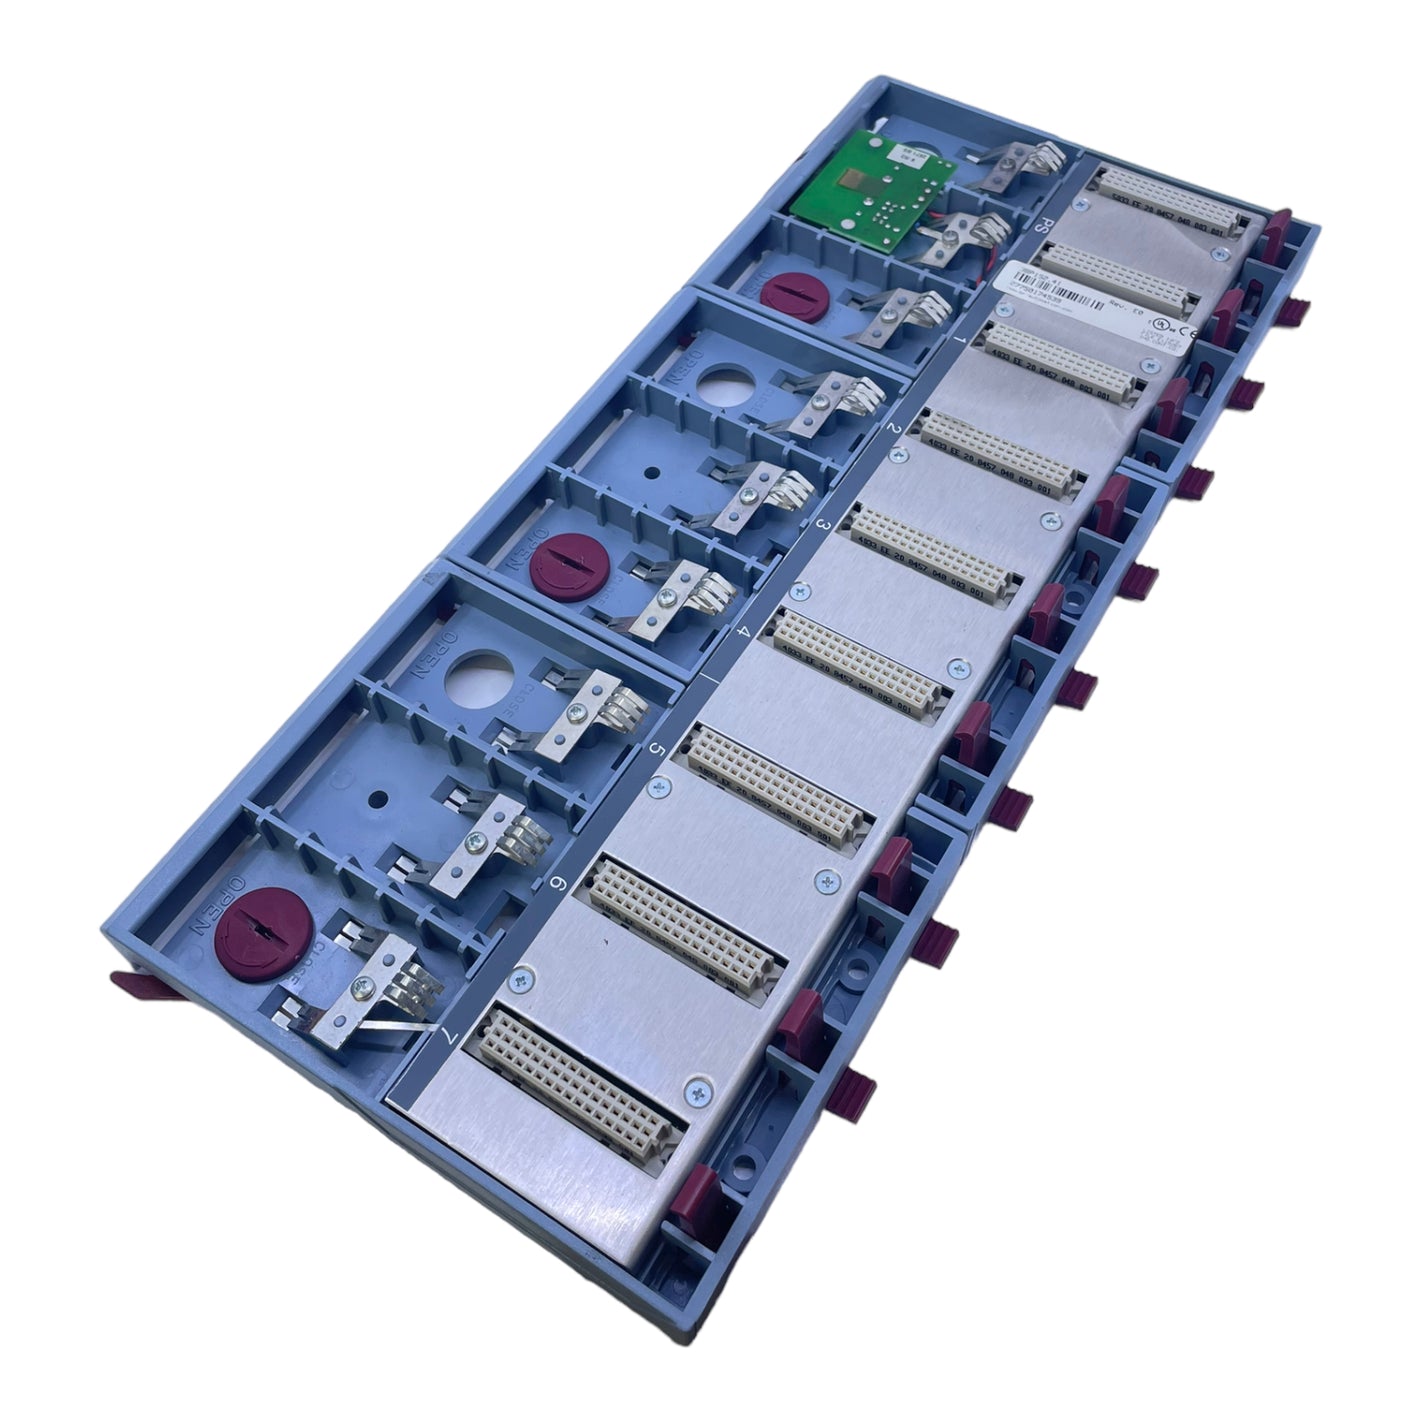 B&amp;R 3BP152.41 rear panel module 9 slots IP20 B&amp;R rear panel module 